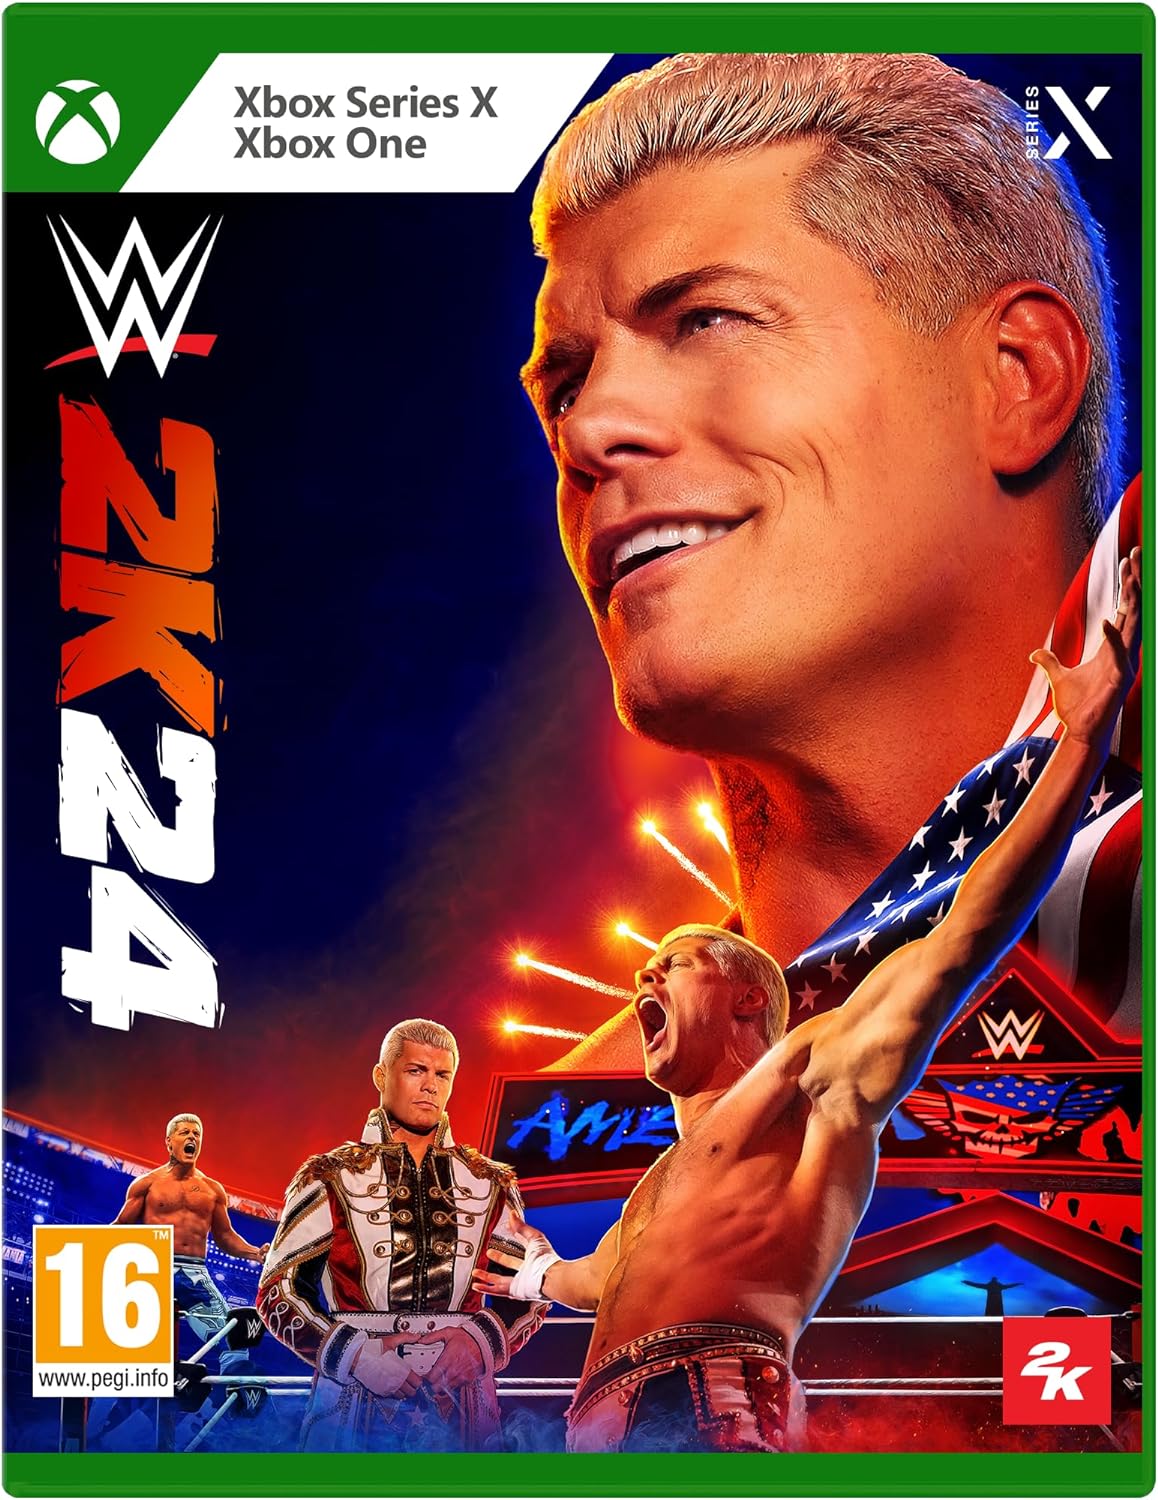 WWE 2k24 Cross-Gen Edition Digital Download Key (Xbox One/Series X): VPN Activated Key